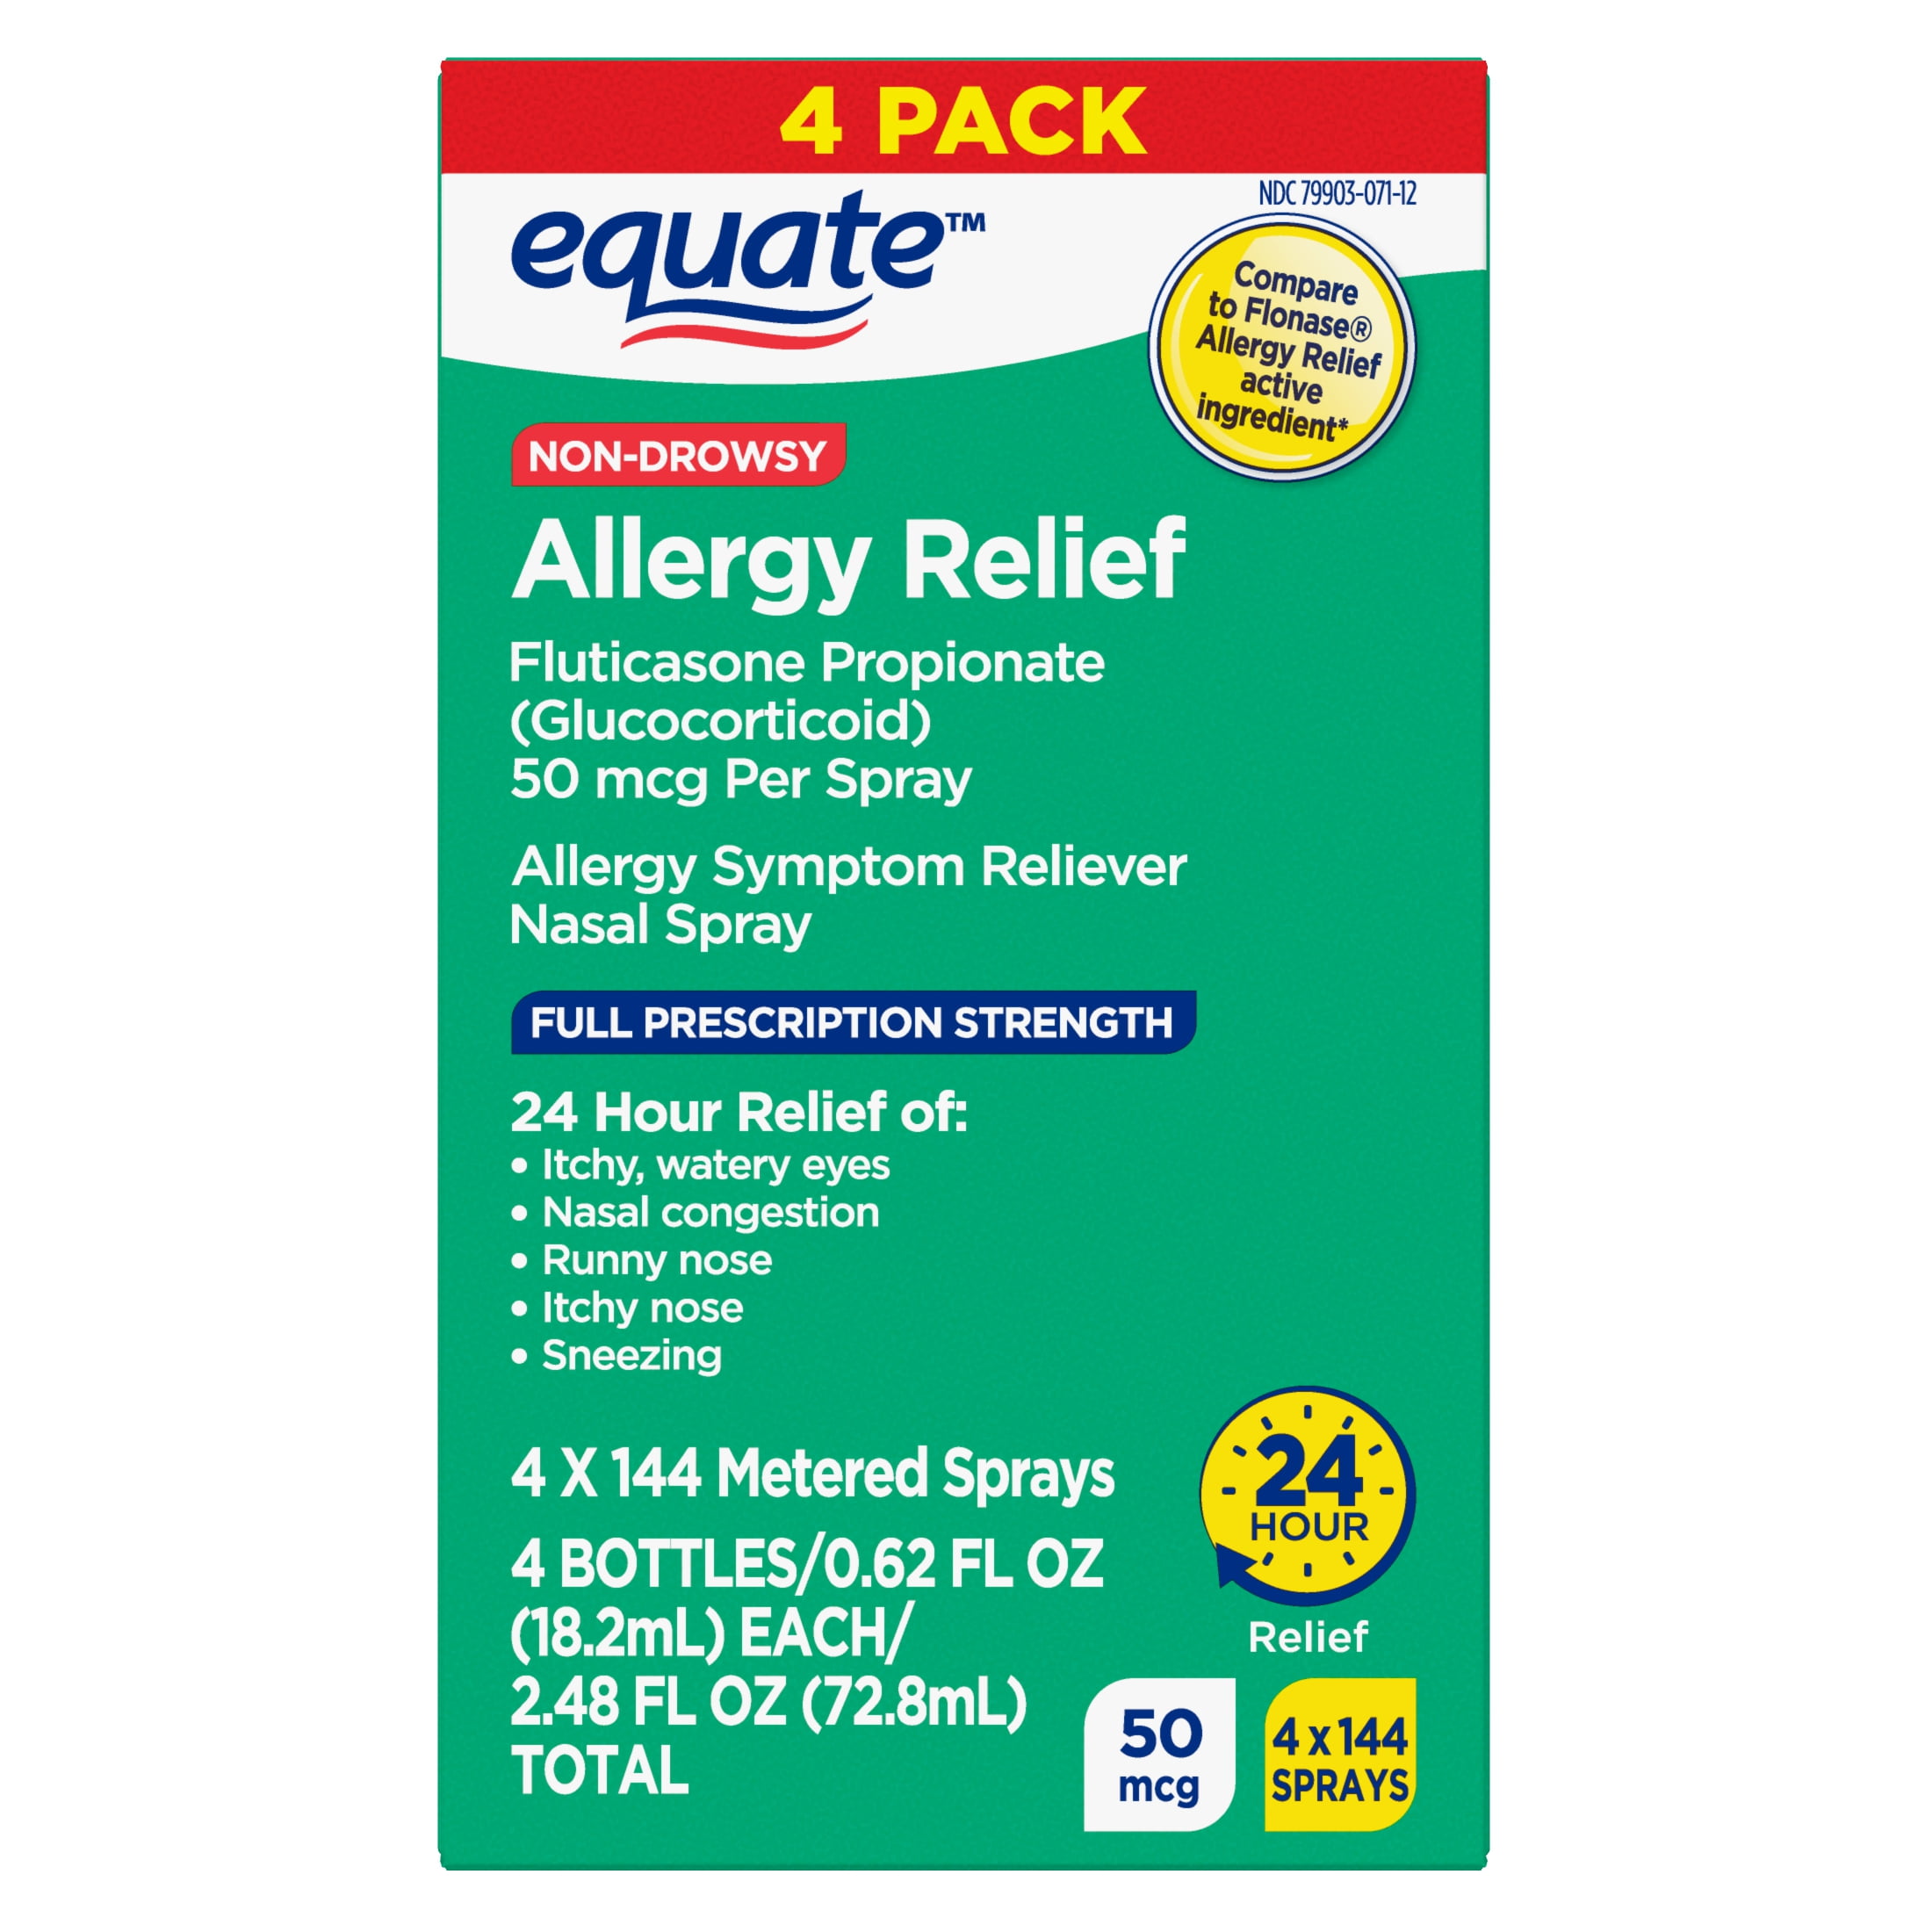 Equate Non-Drowsy Fluticasone Propionate Allergy Relief Nasal Spray, 50 mcg, 144 Metered Sprays, 4 Pack